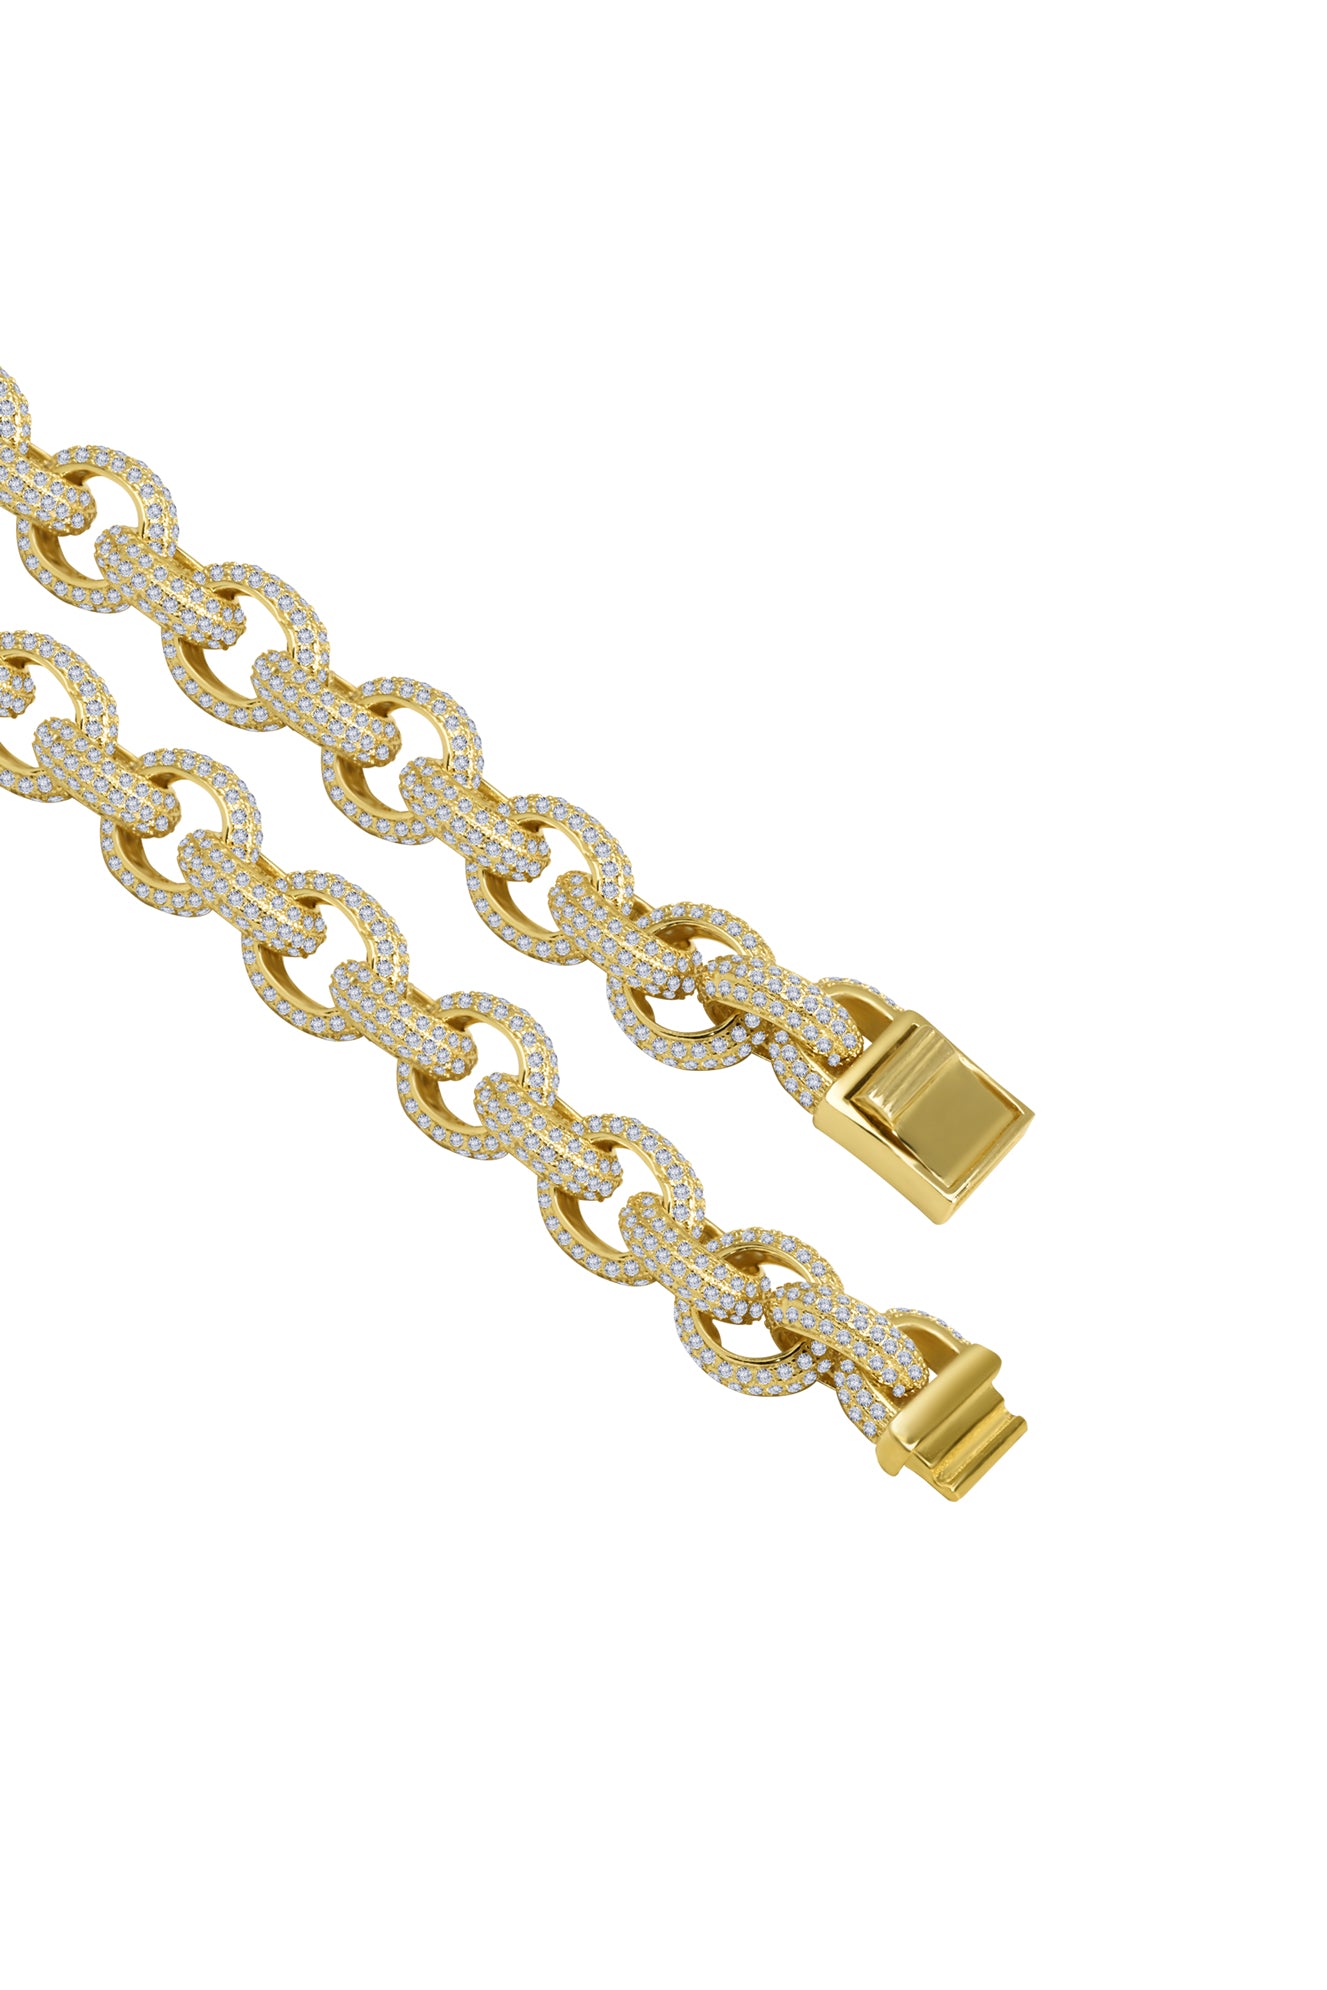 Hermes Gold Bracelet — NO SERVICE